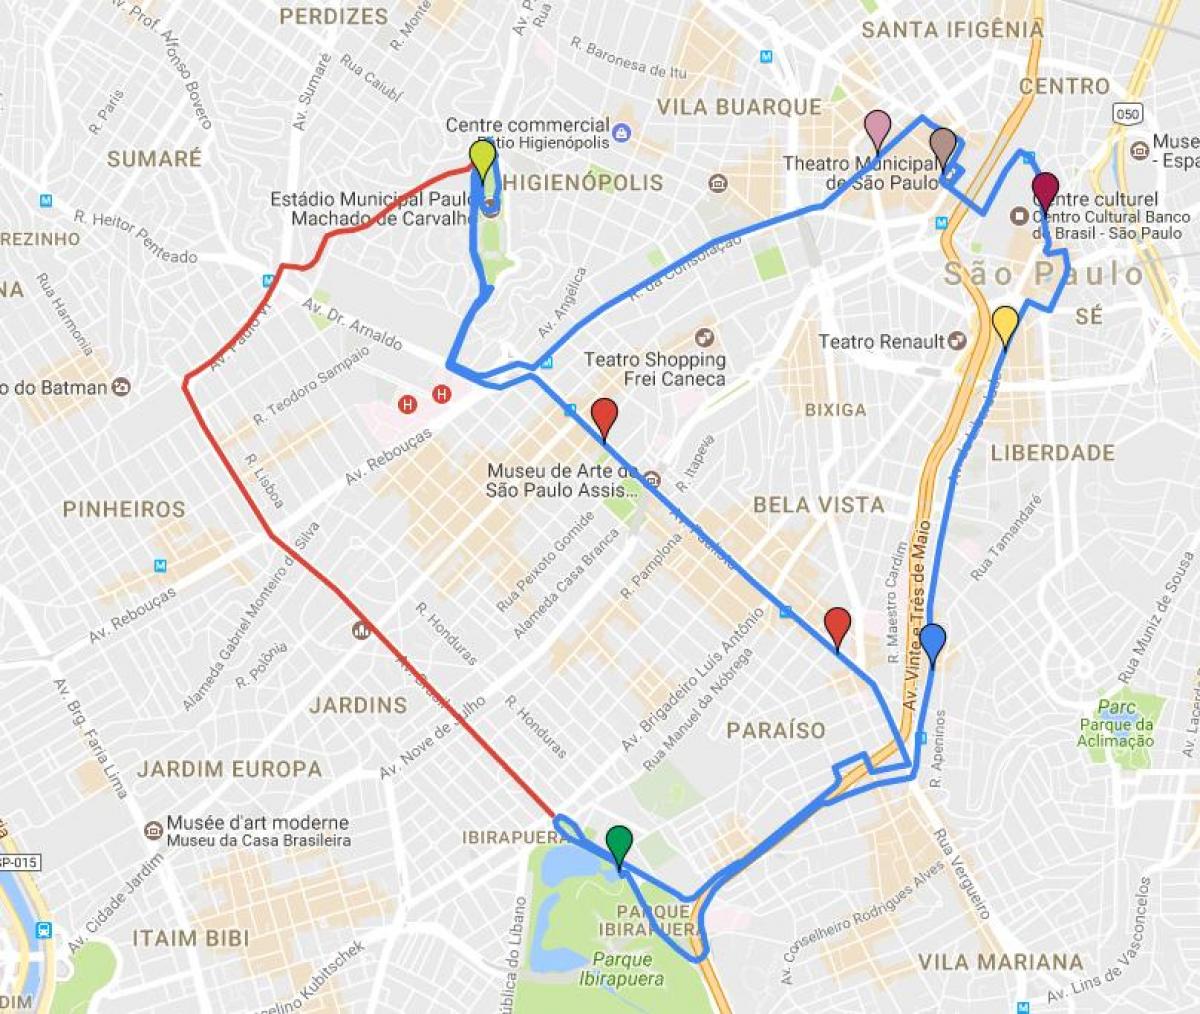 Mapa de la circular turismo de São Paulo - Líneas